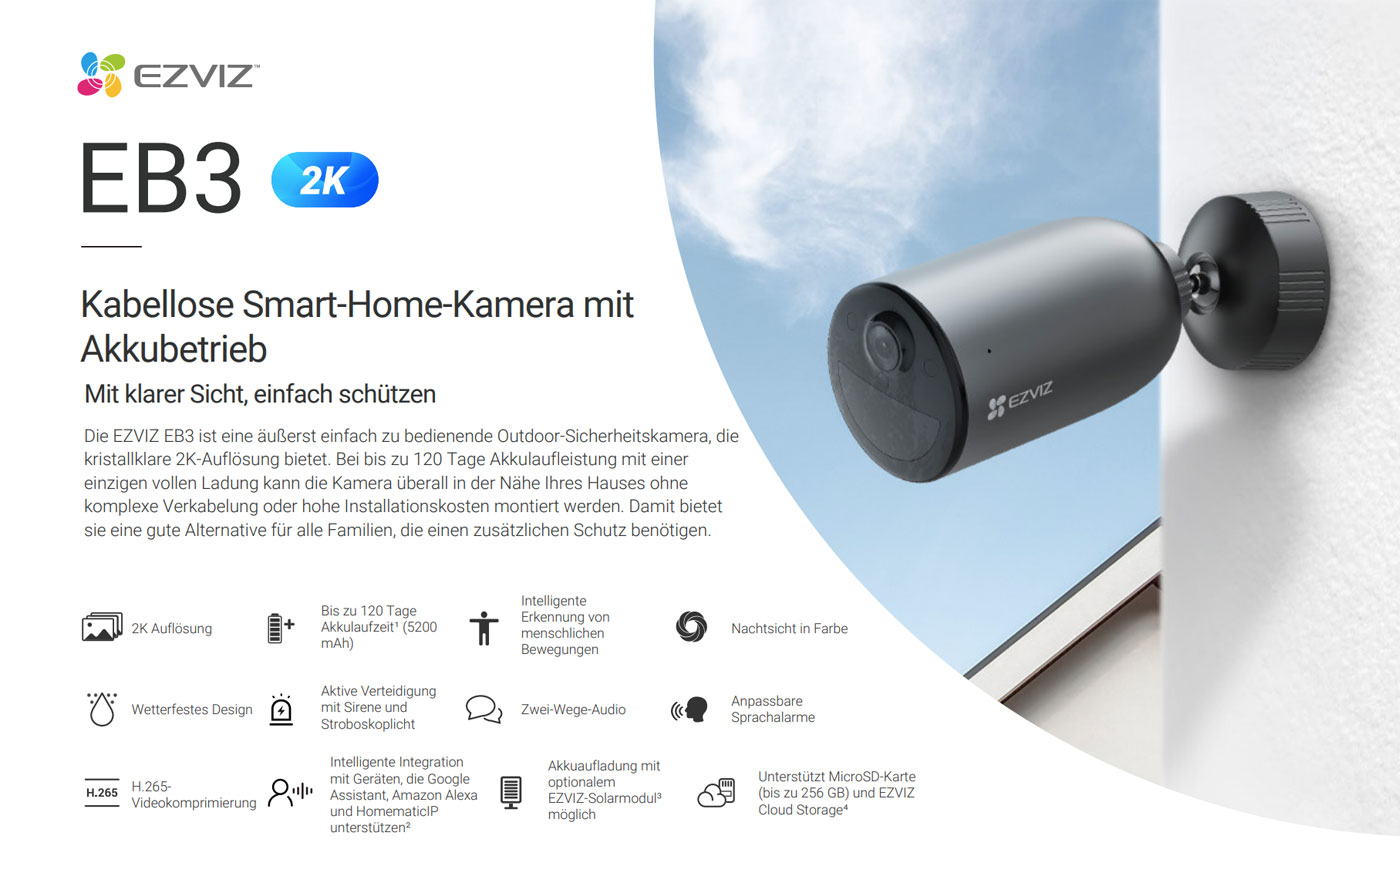 Ezviz EB3 Kabellose Smart-Home-Kamera mit Akkubetrieb